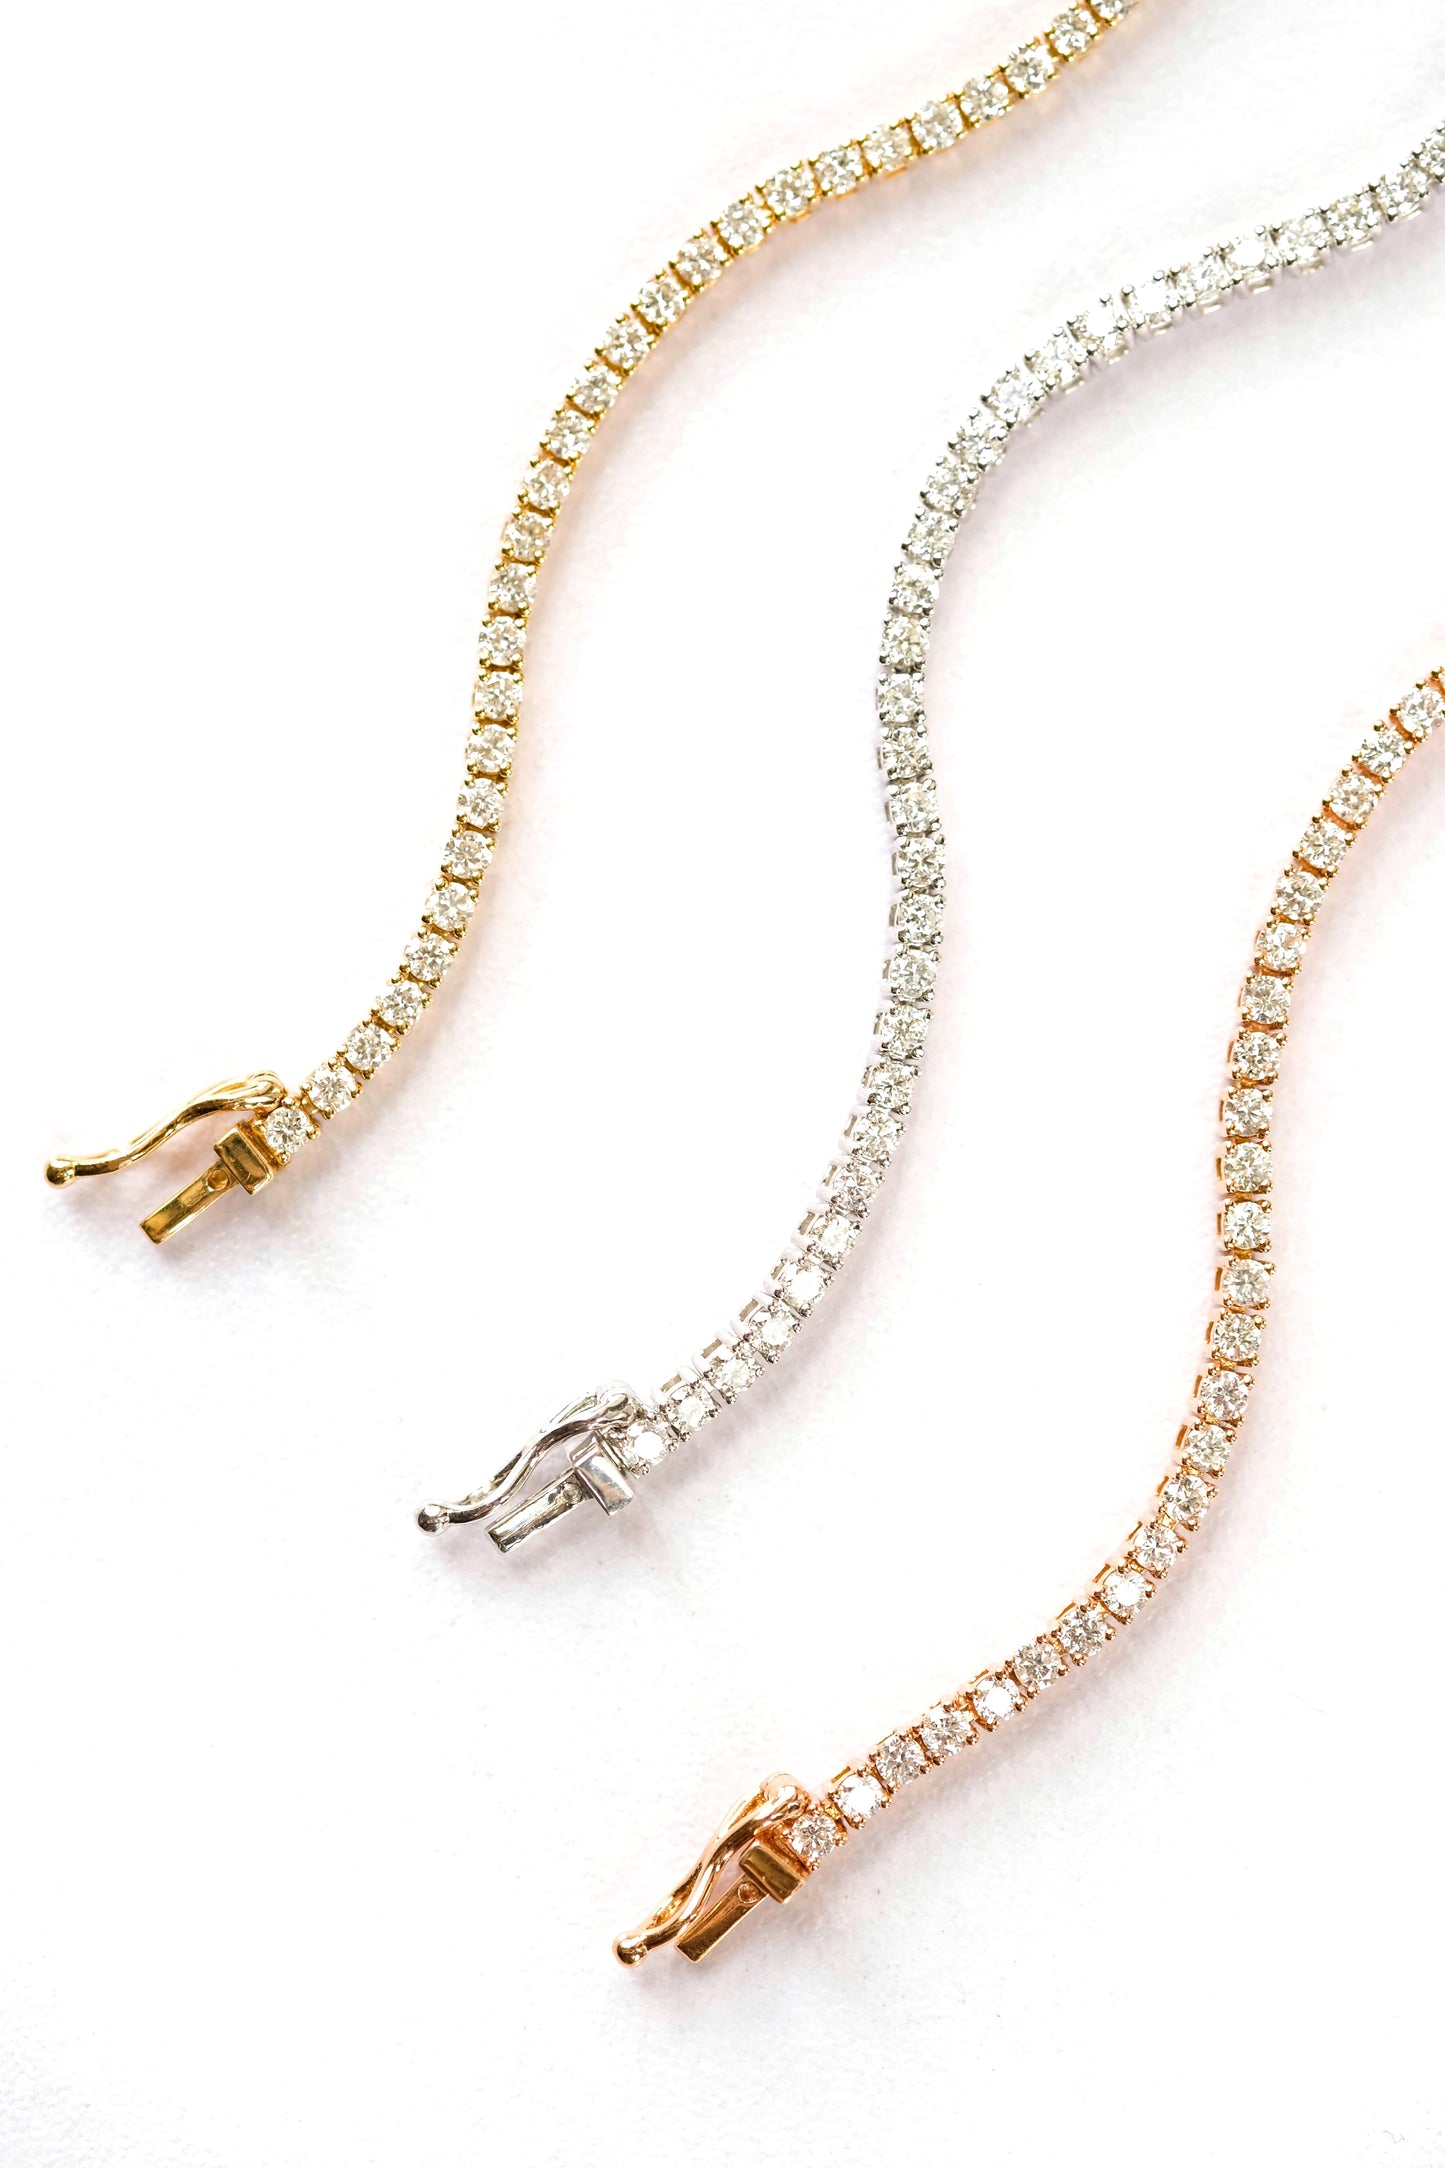 Pink gold & diamond “tennis” bracelet